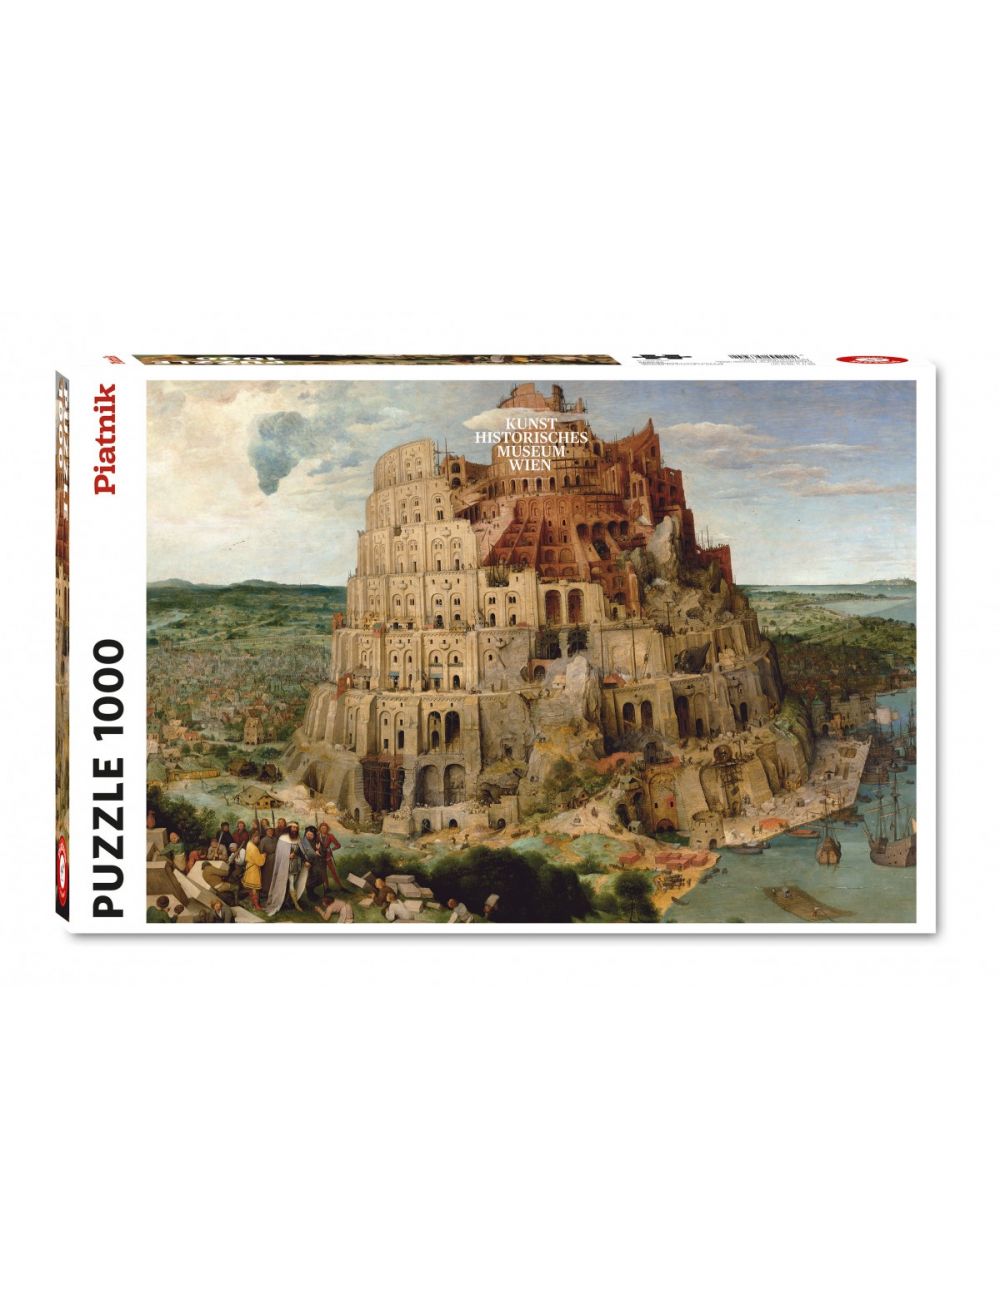 Piatnik puzzle Bruegel Babilonski stolp 